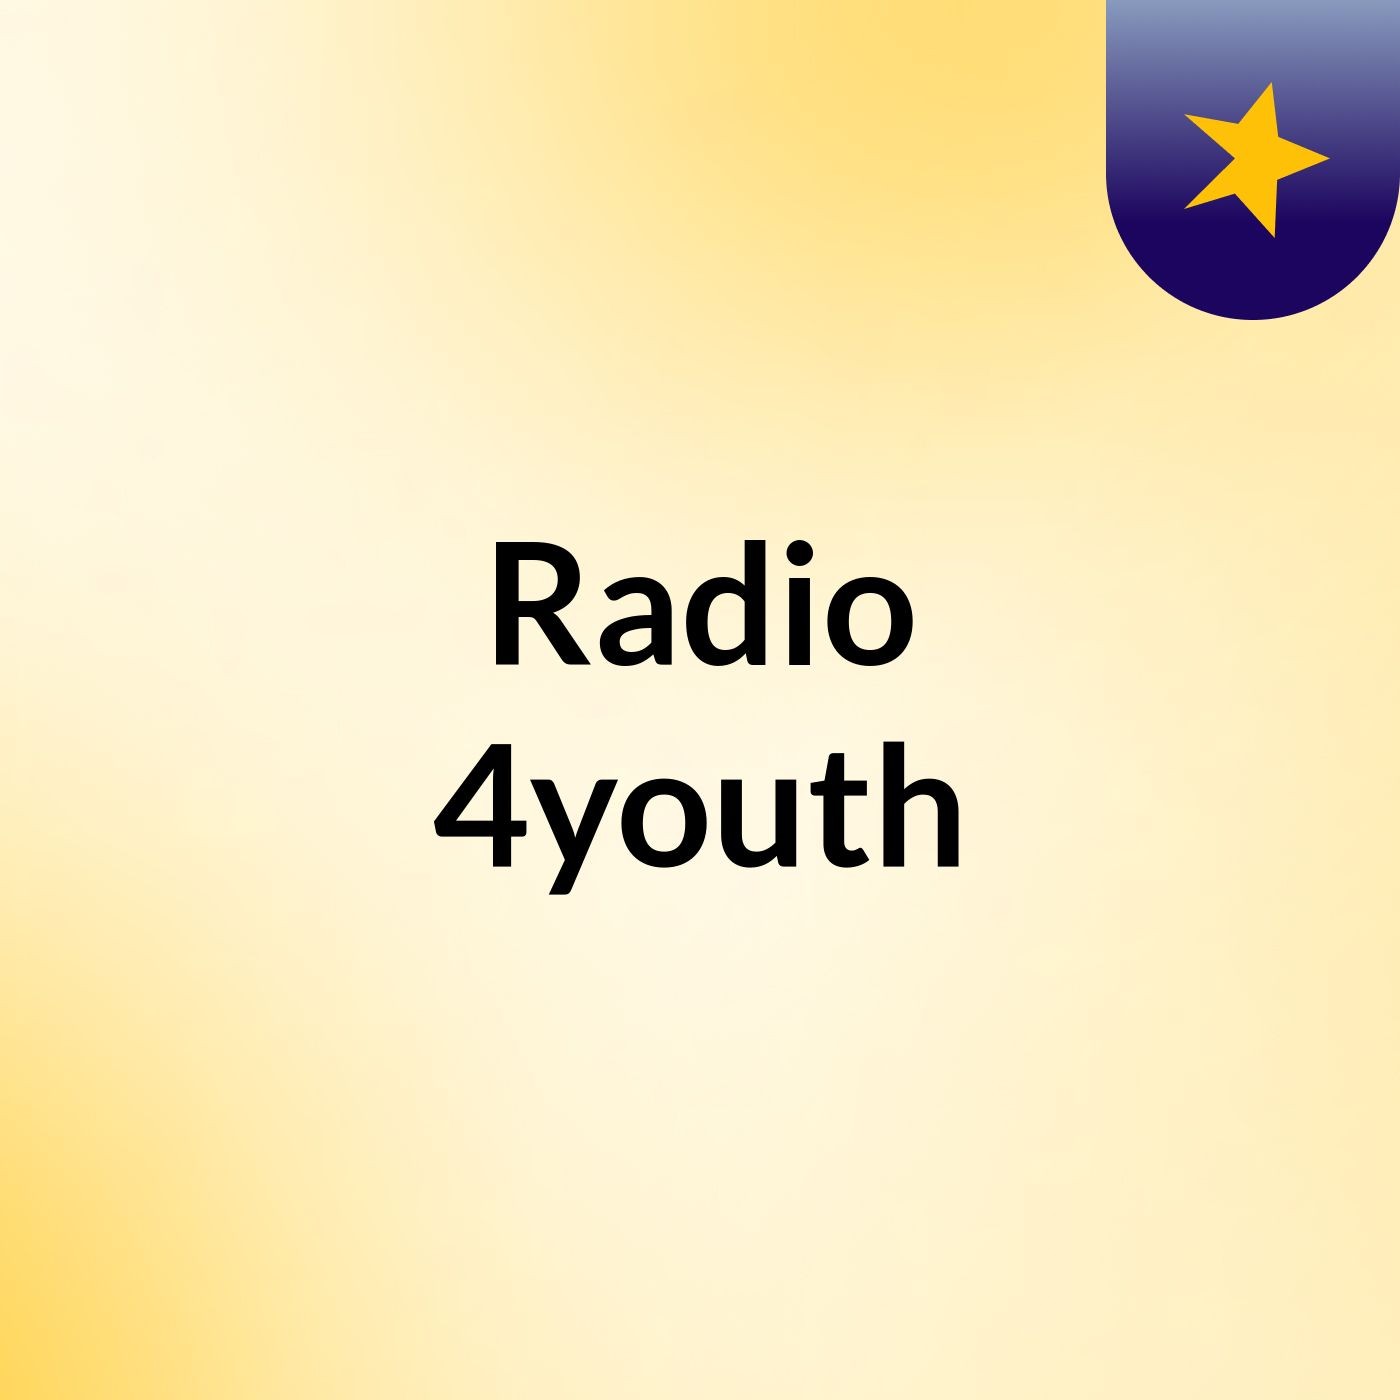 Radio 4youth